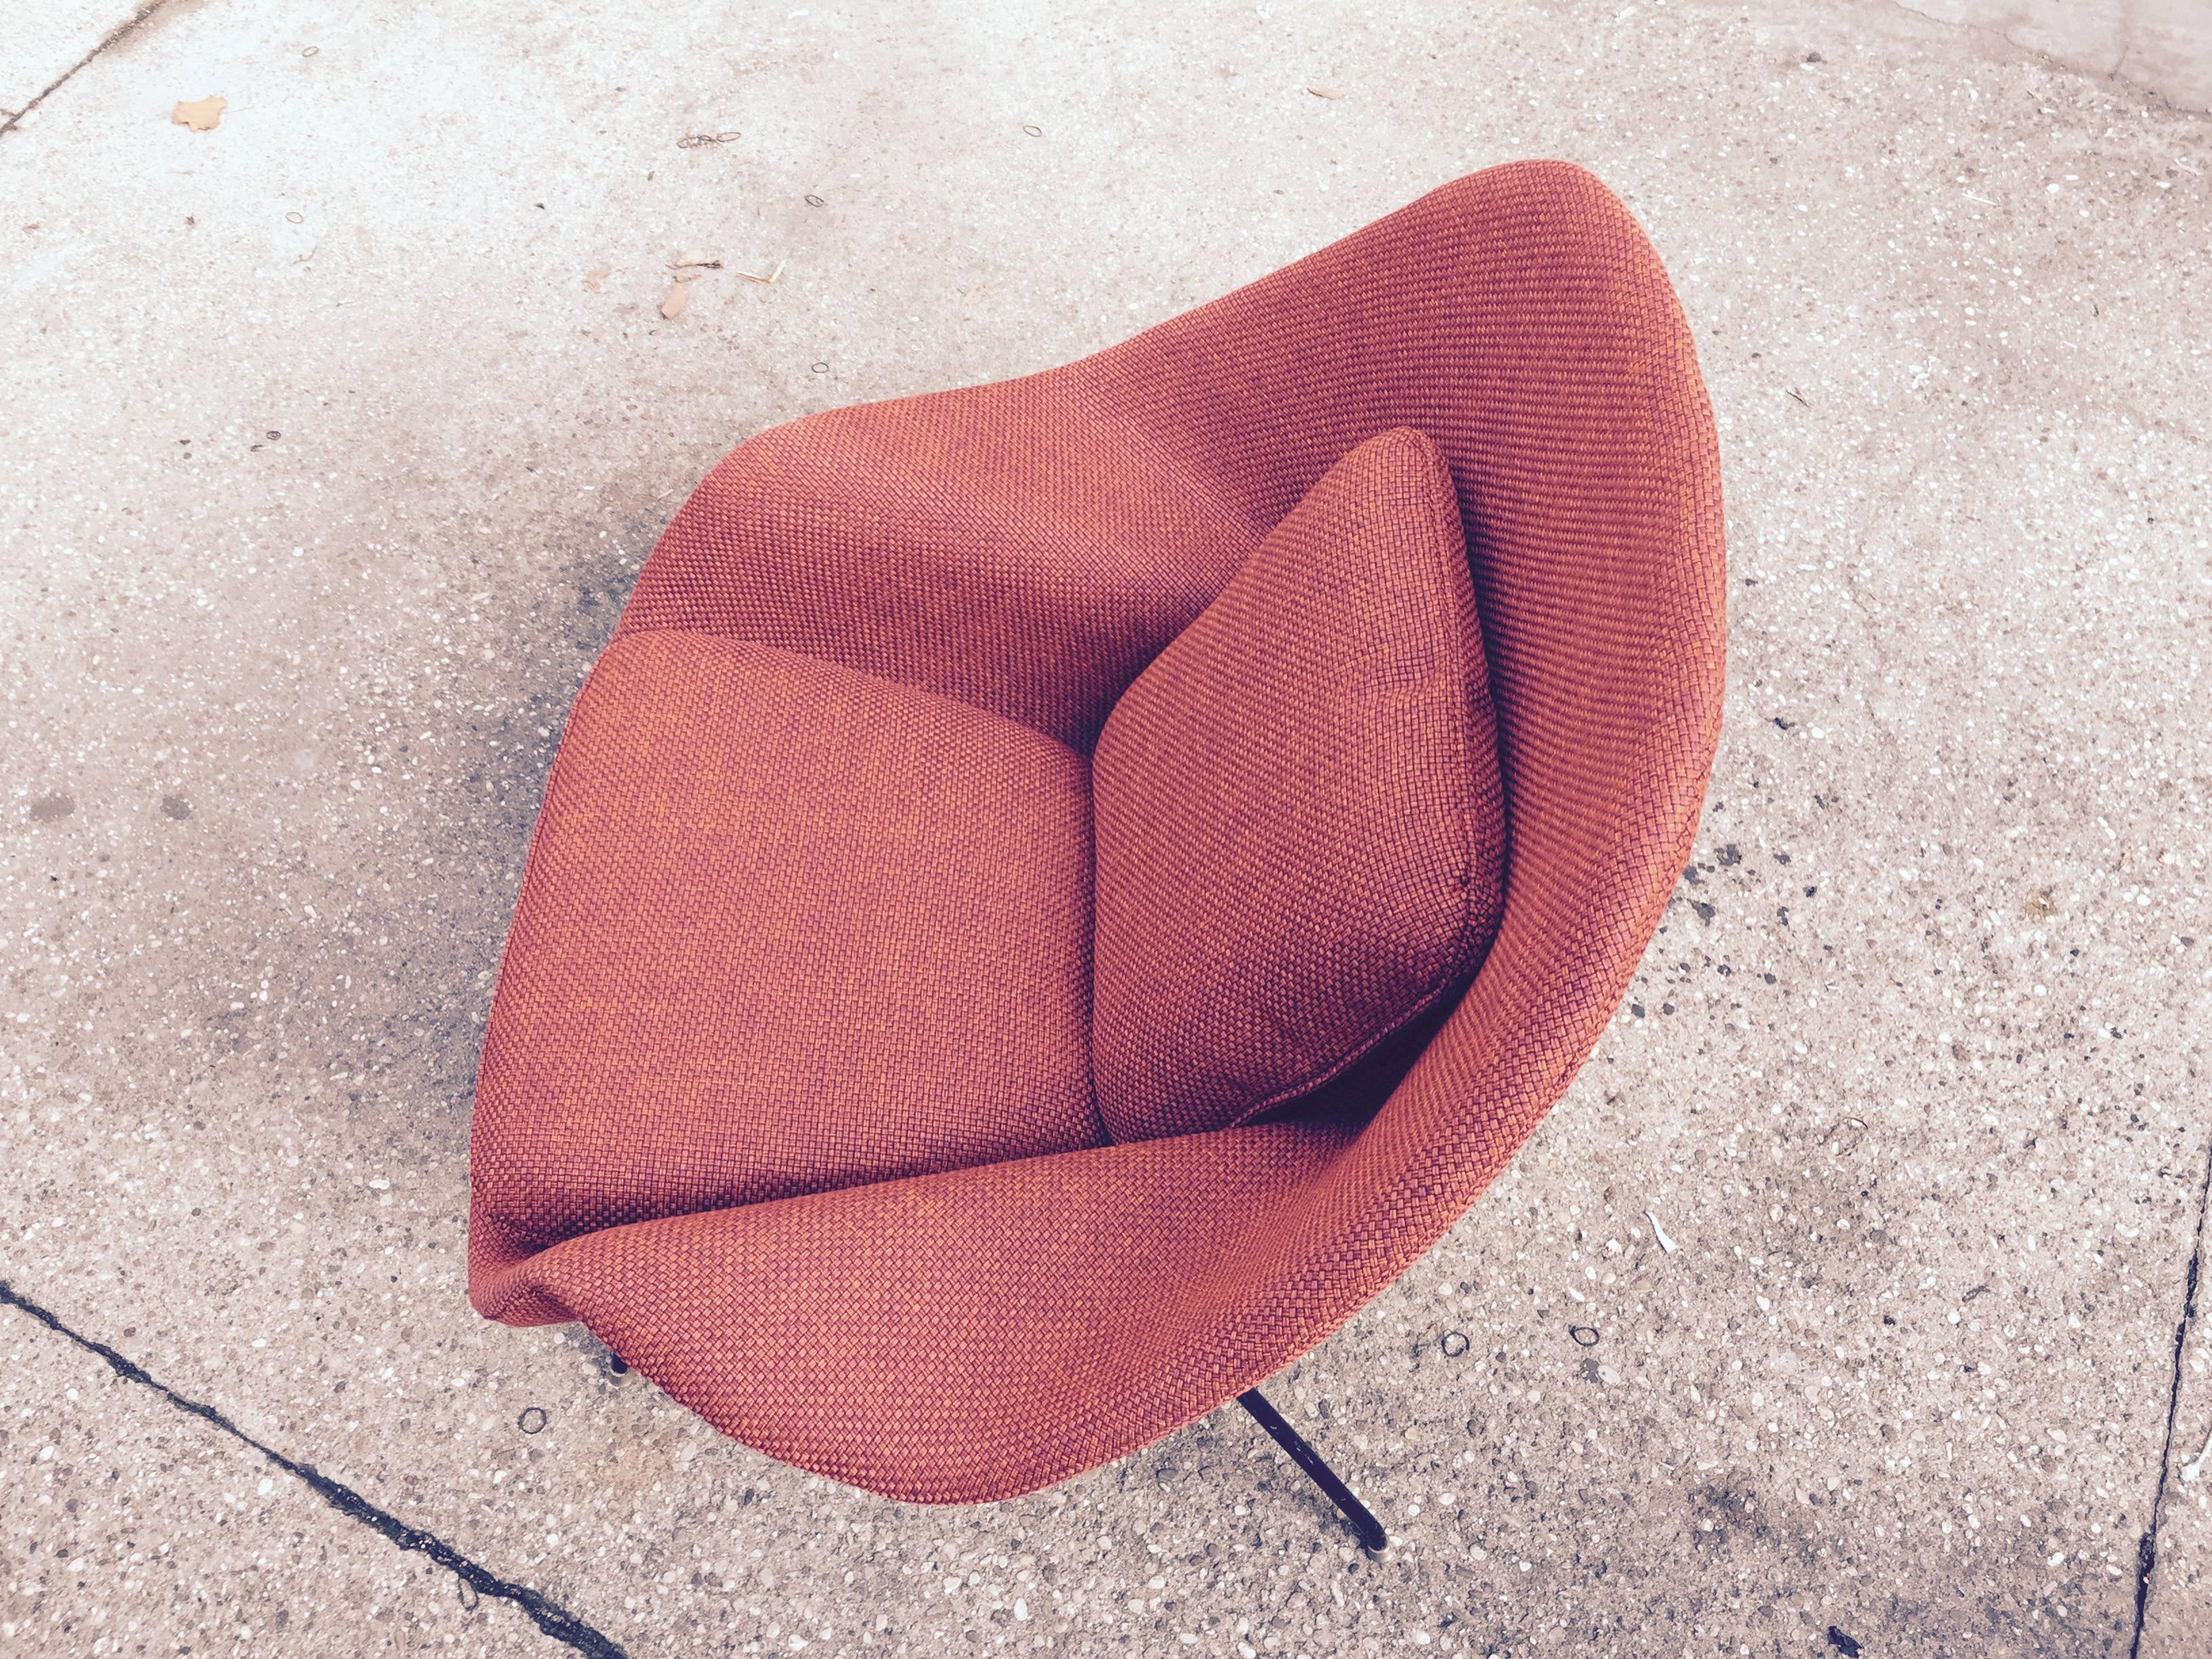 American Chair with Ottoman Designed by Eero Saarinen in 1950